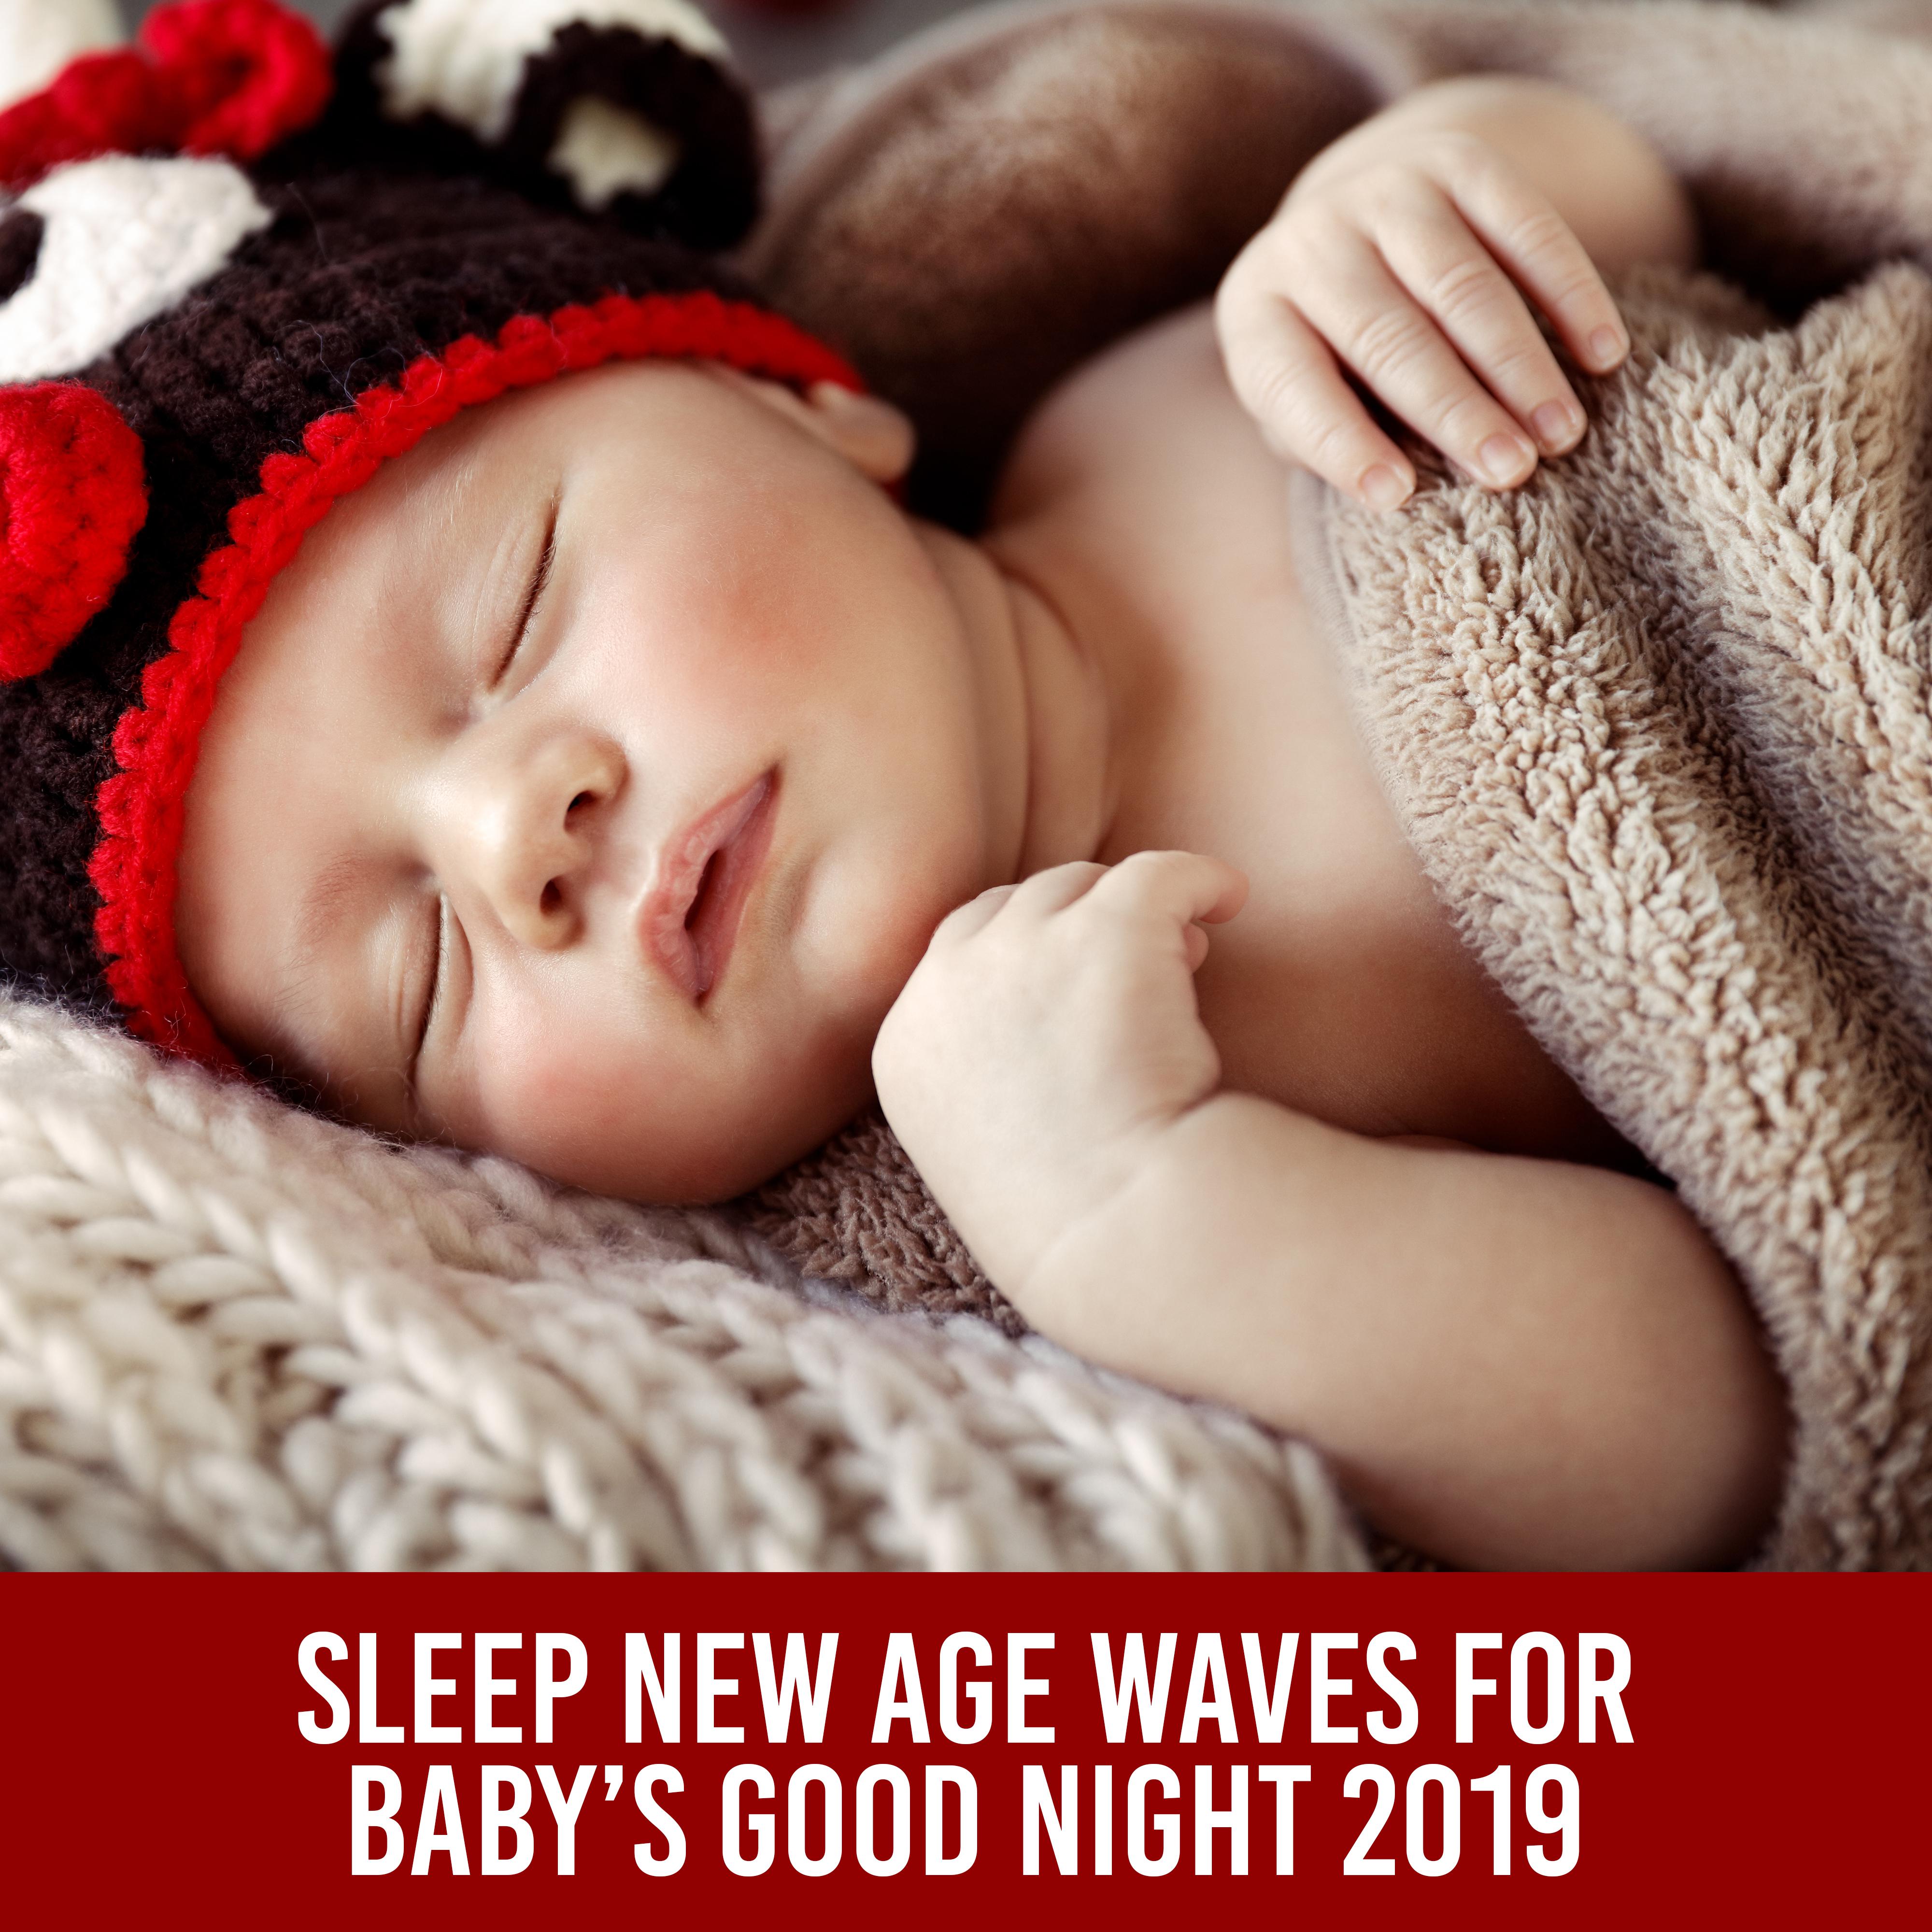 Sleep New Age Waves for Baby’s Good Night 2019